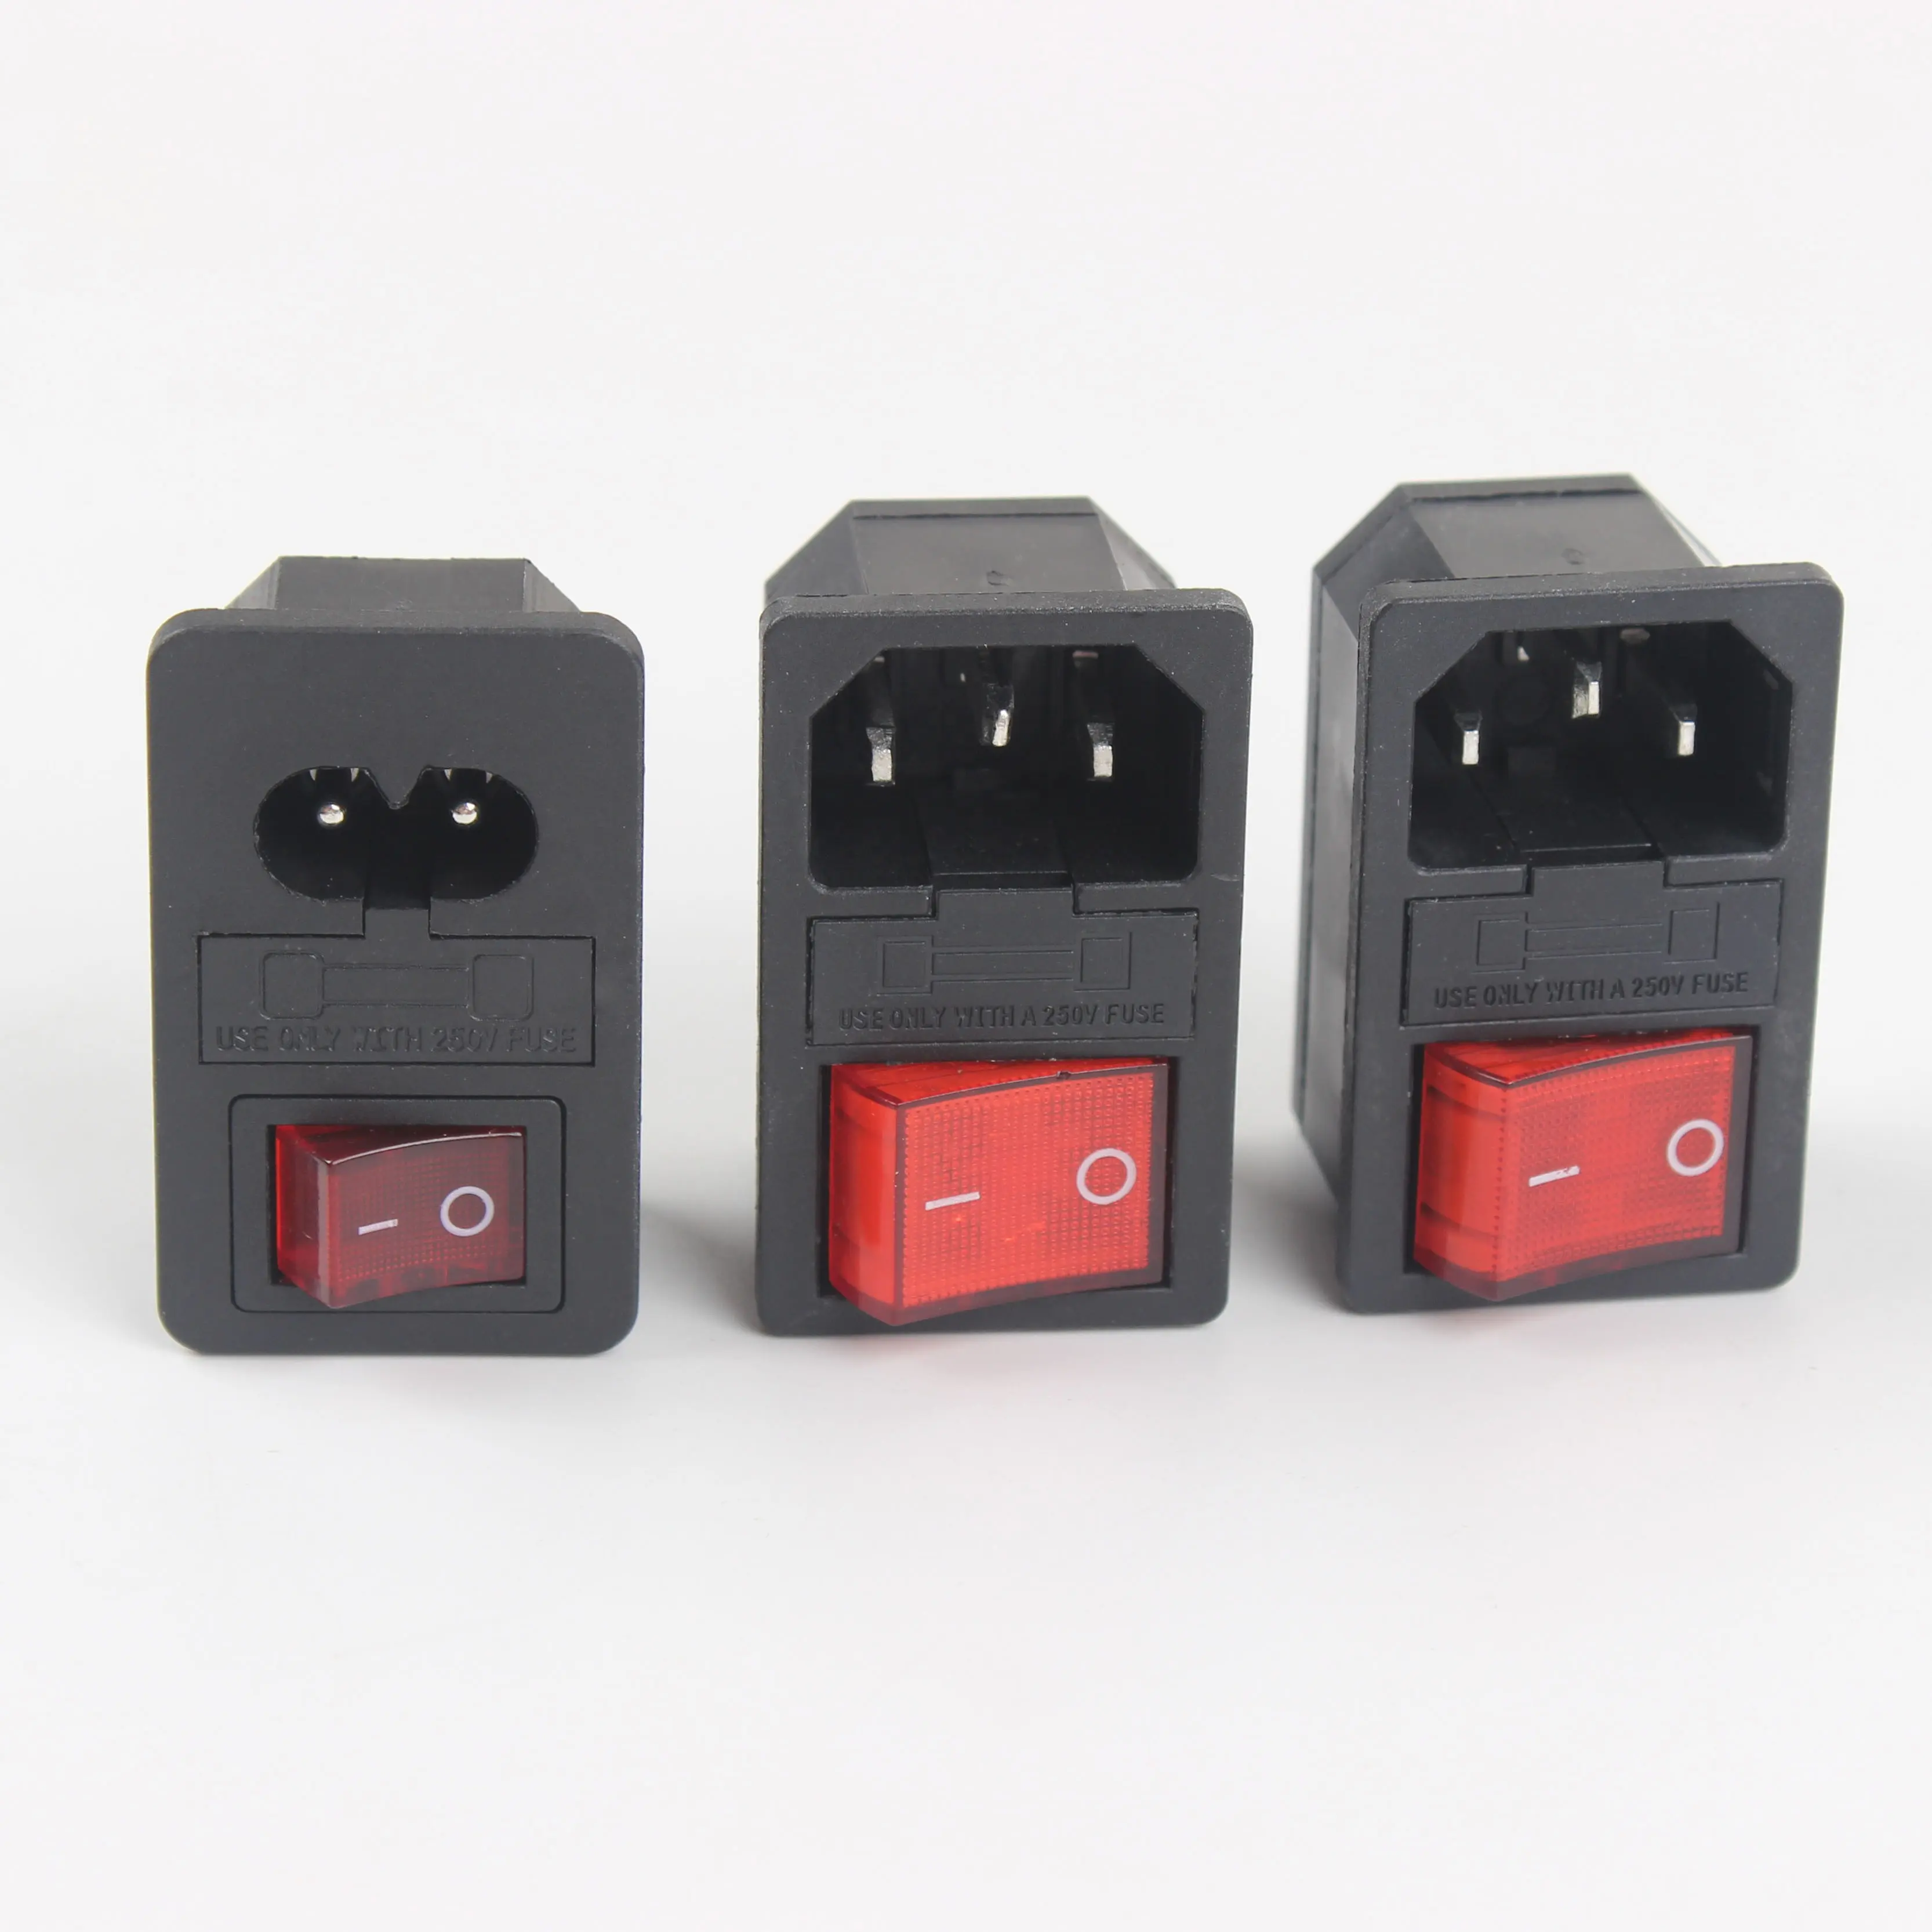 2 pin ve 2 pin/3 pin/4 pin rocker anahtarı 1 ışık 2 ile elektrik fişi 10A 250V AC güç soketi